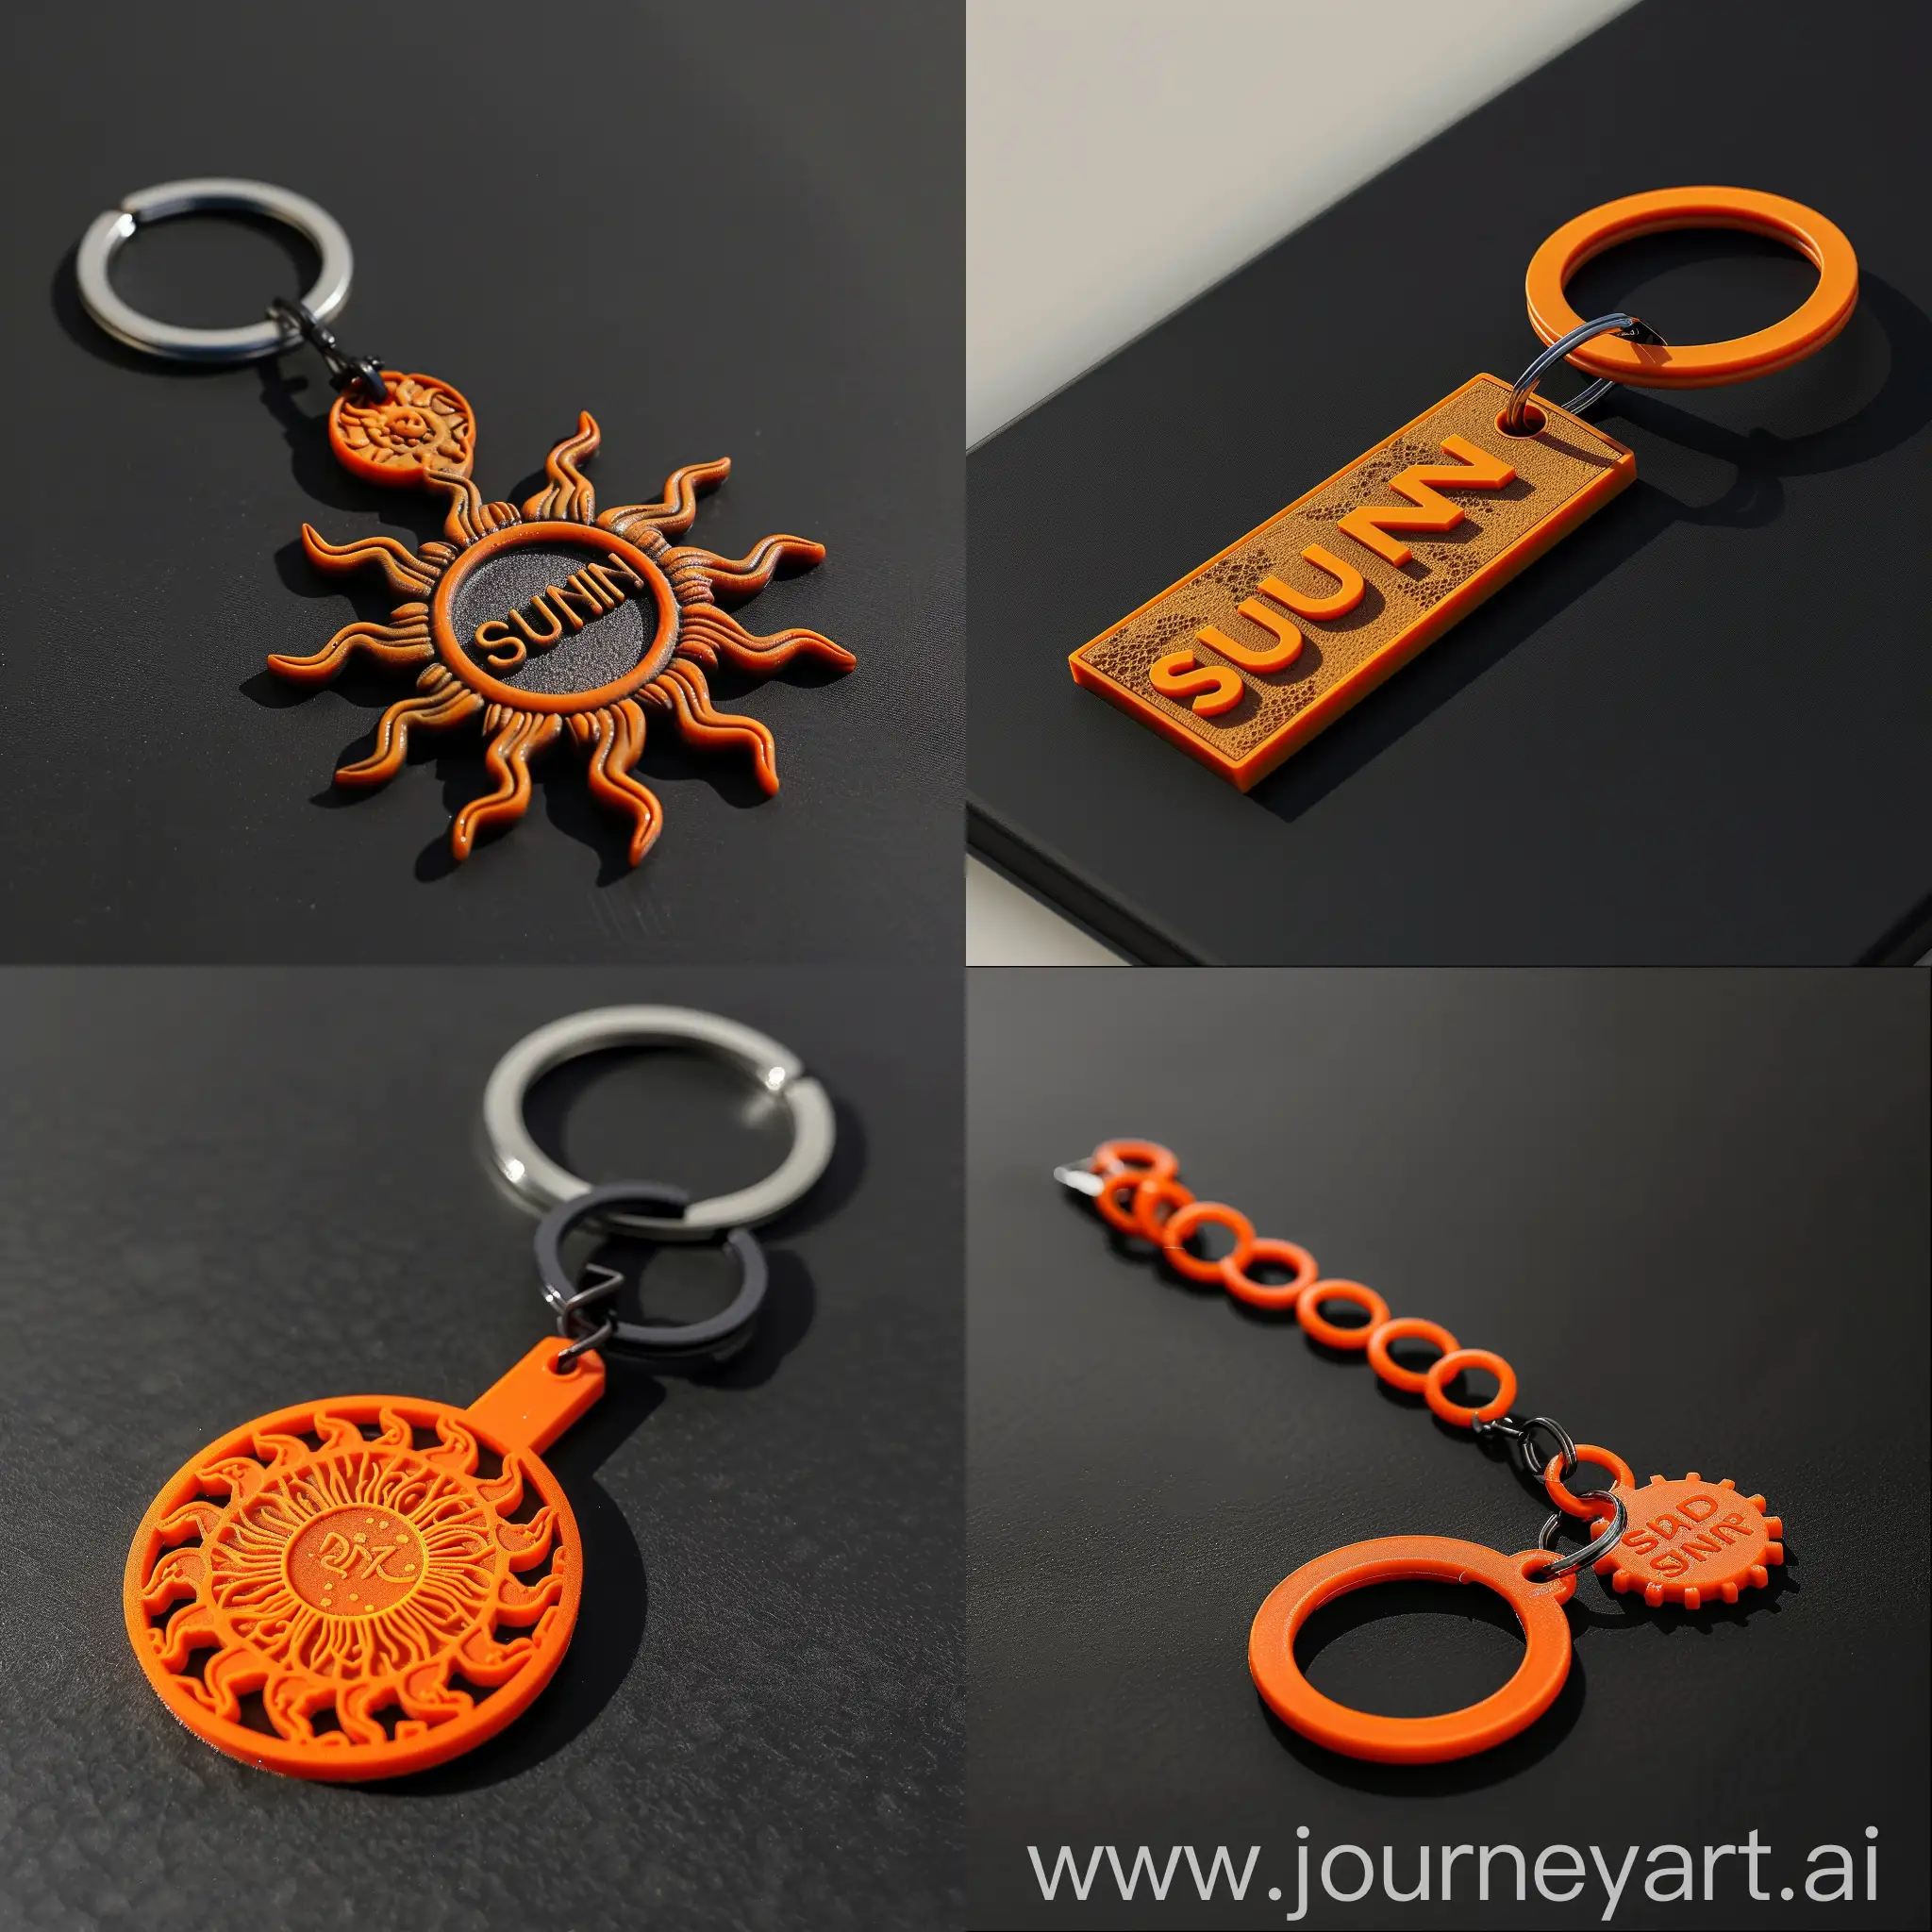 orange keychain on a black background with the inscription sun
2D